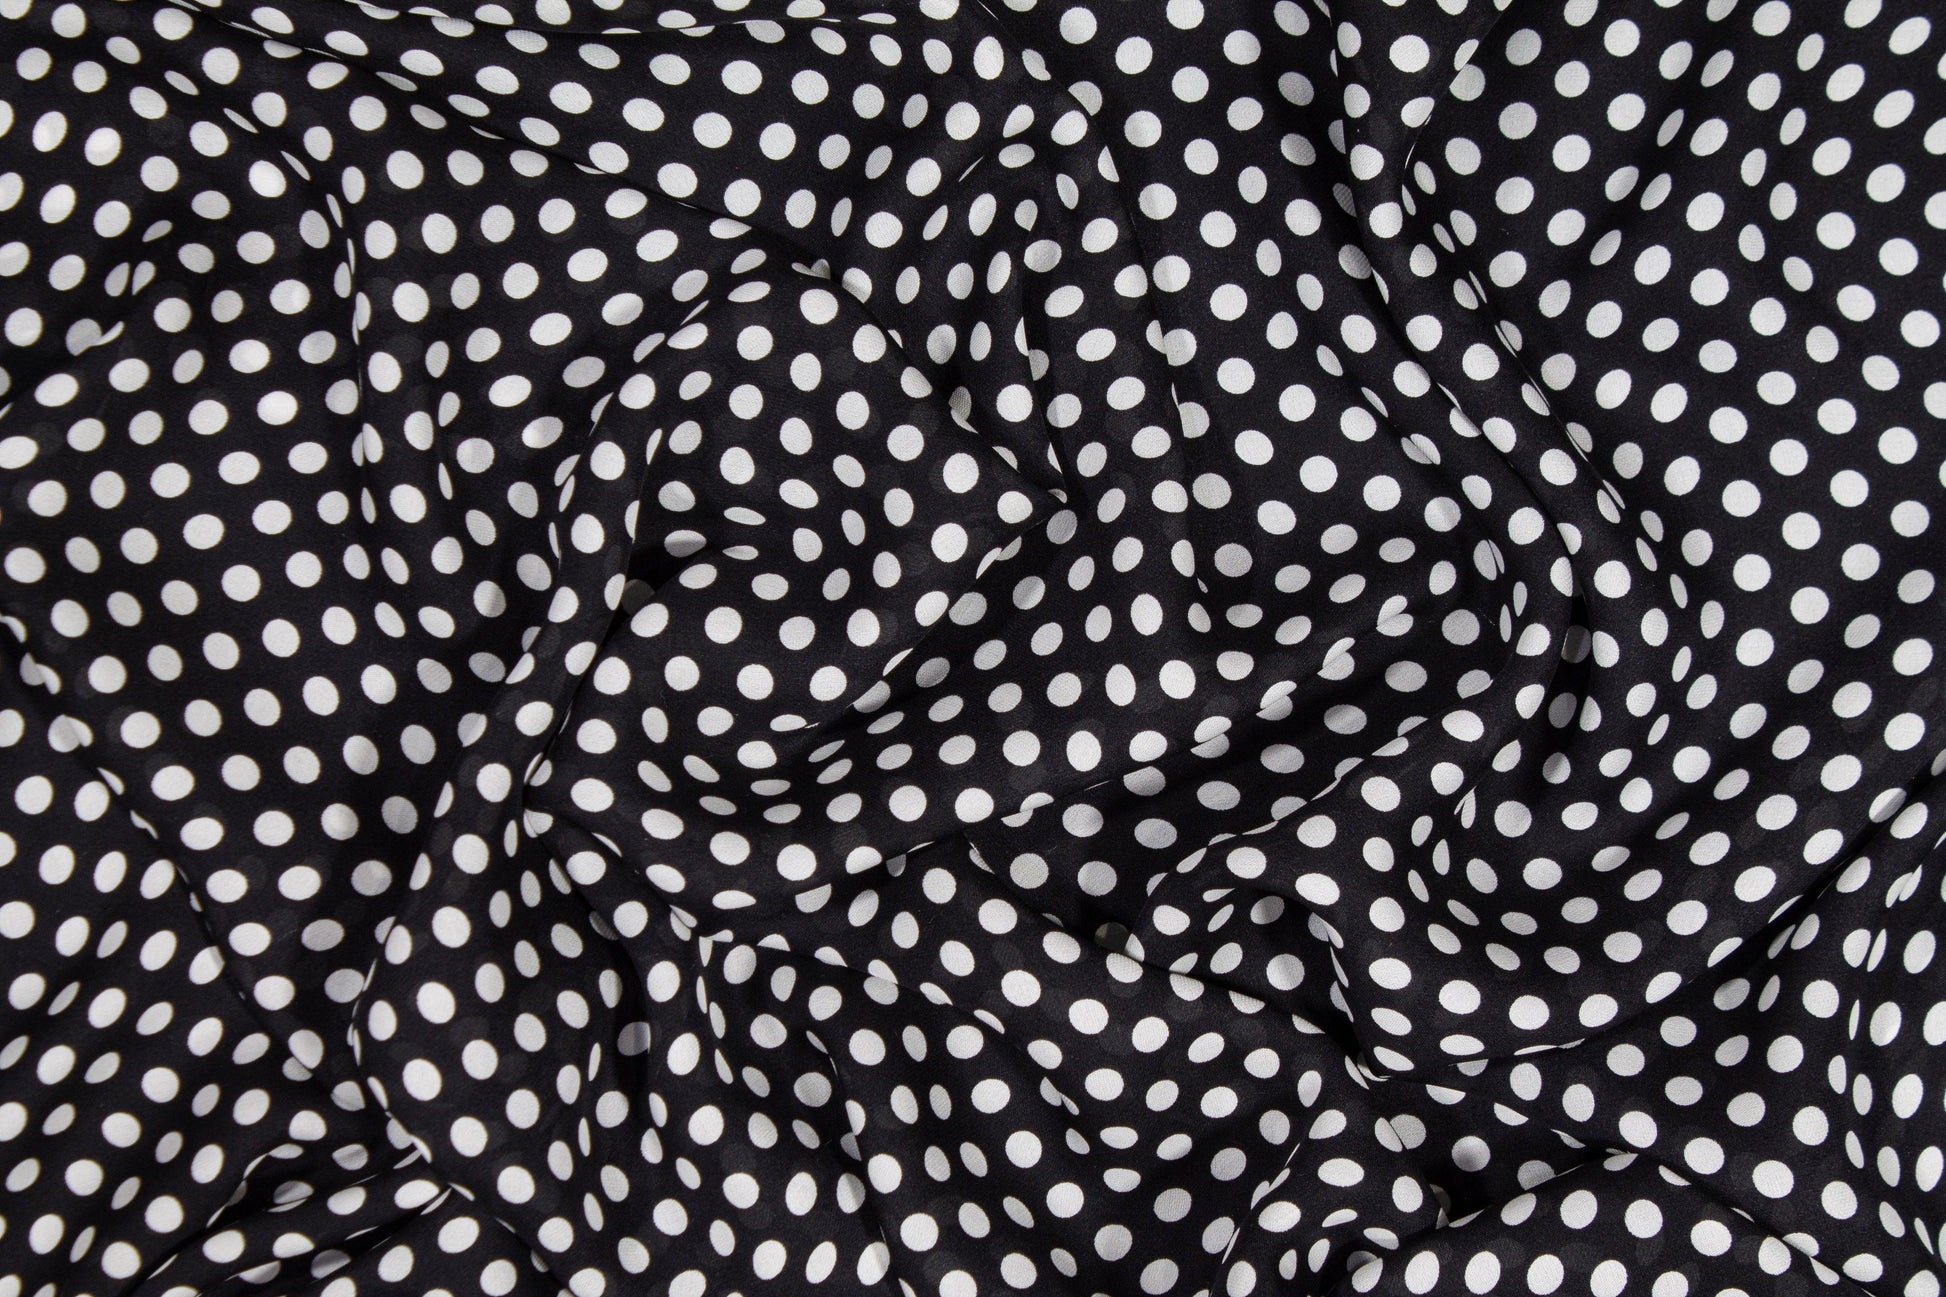 Polka Dot Silk Georgette - Black and White - Prime Fabrics